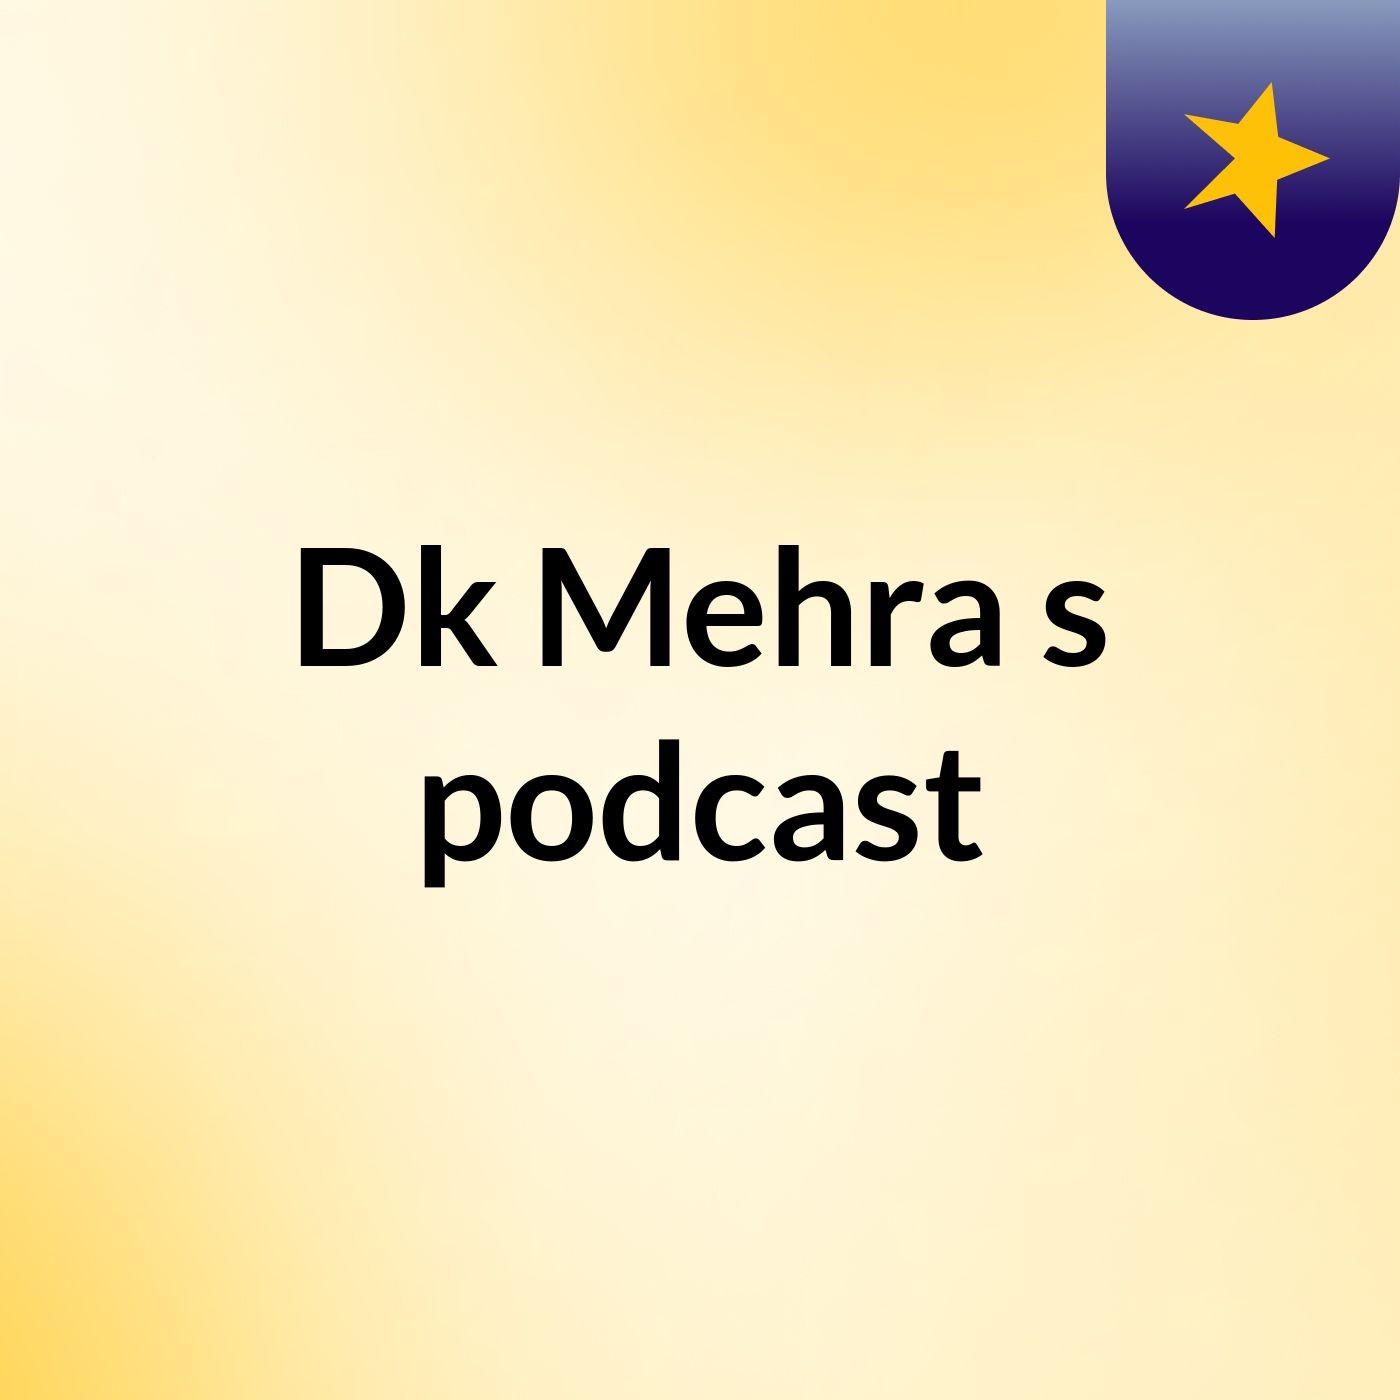 Dk Mehra's podcast